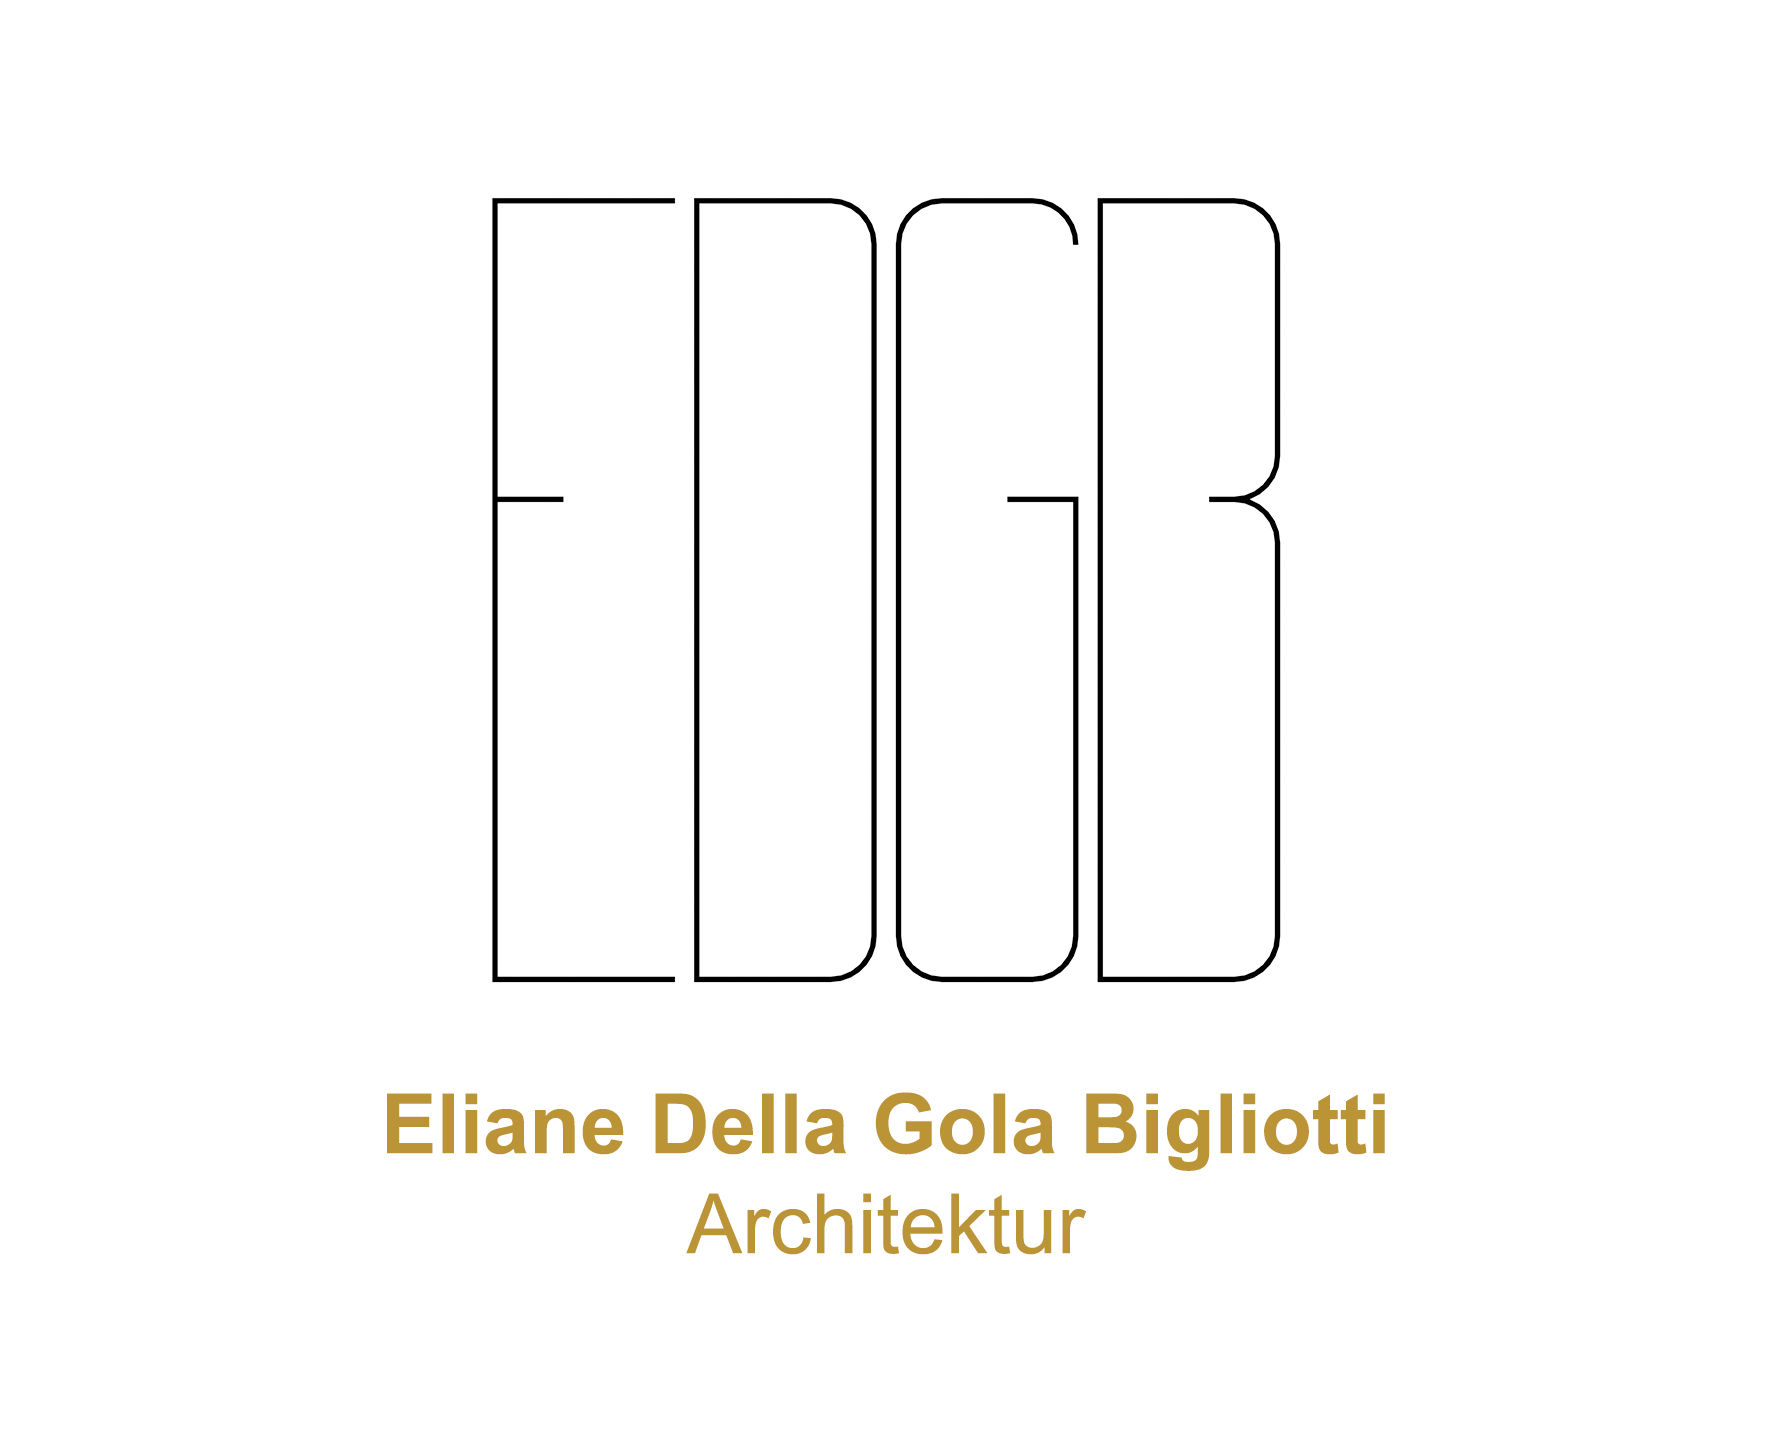 EDGB Architektur